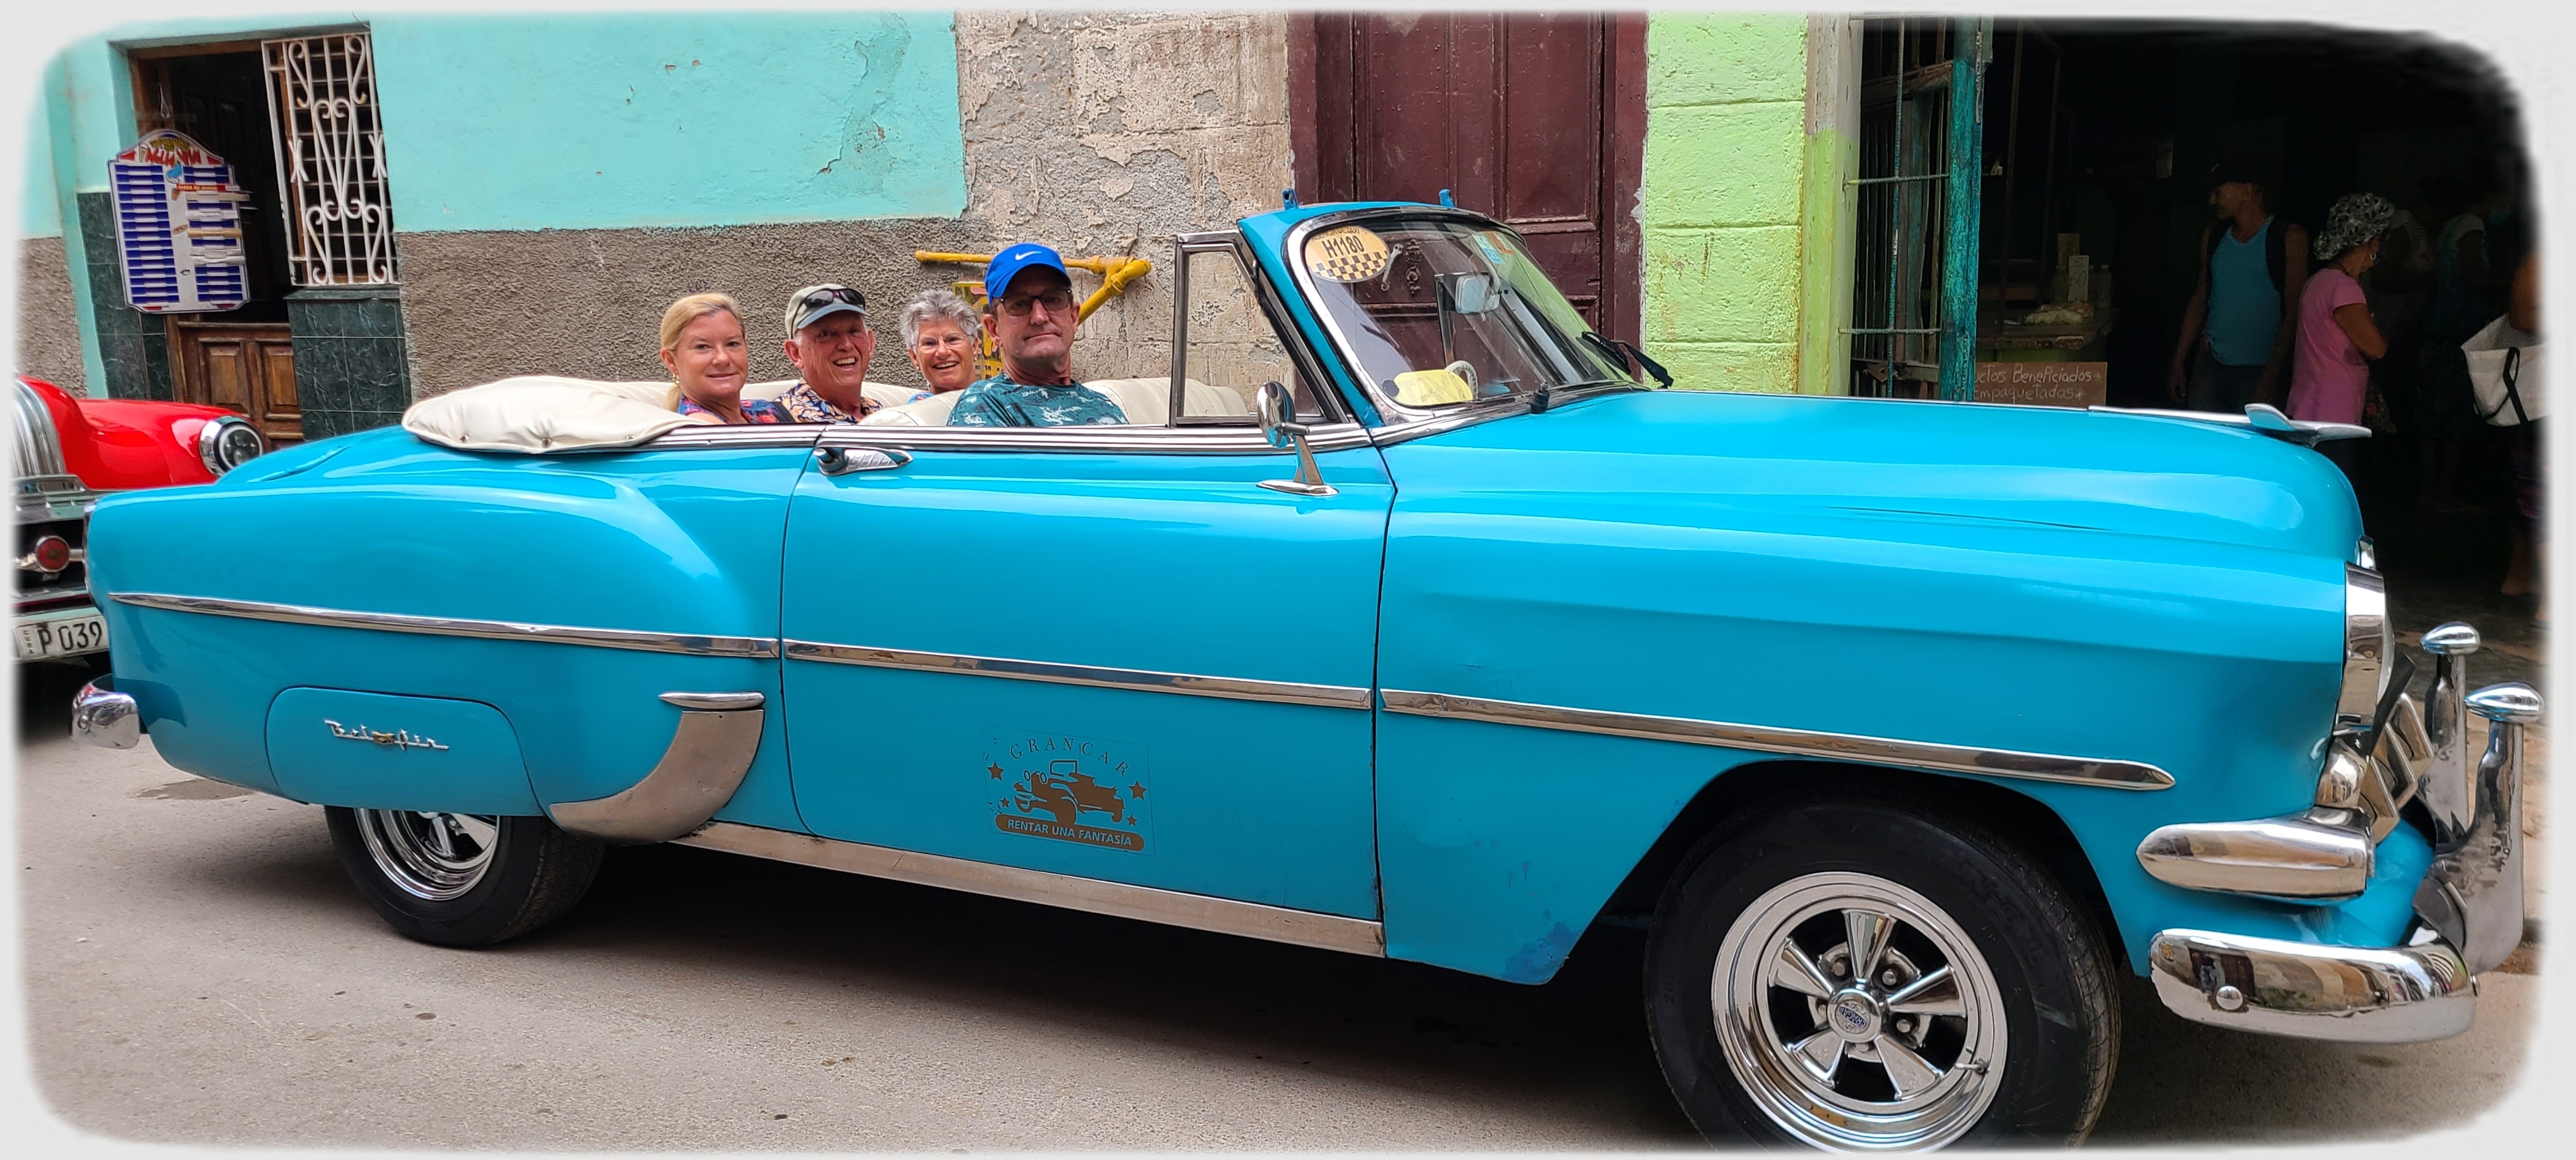 OLLI Members enjoy a classic car tour of Havana. January 2023